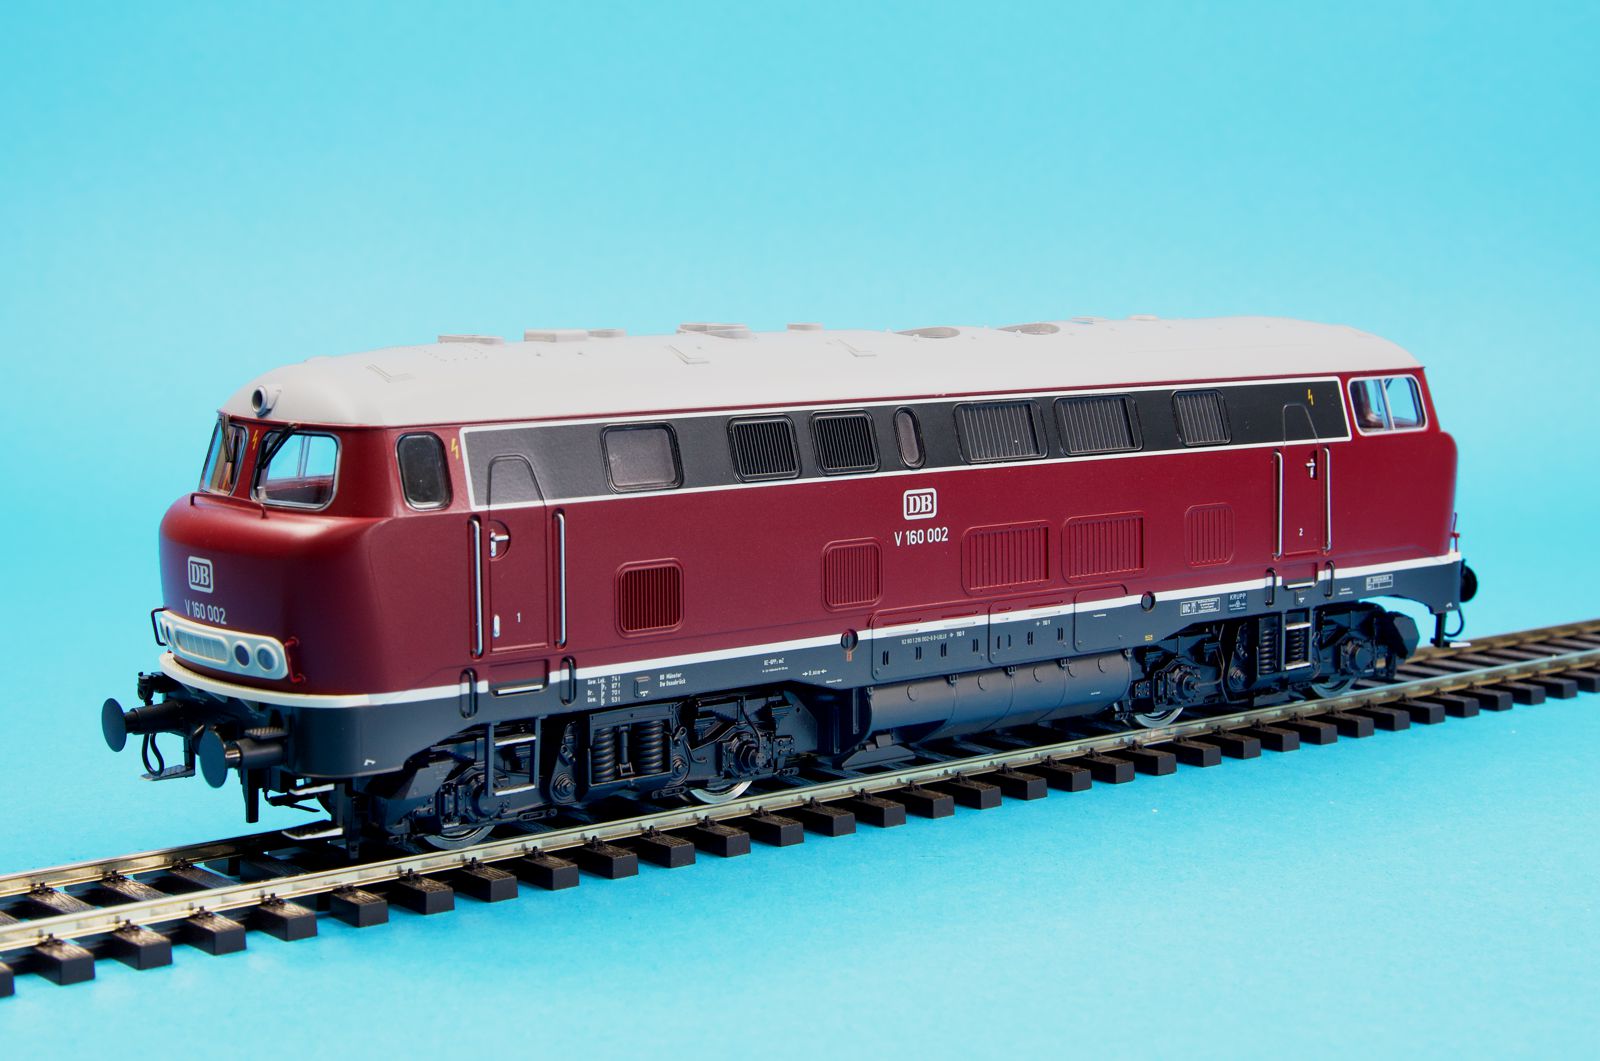 Diesellok V 160 002 Lollo, DB, Ep.6, purpurrot - Bild zeigt vergleichbares Modell